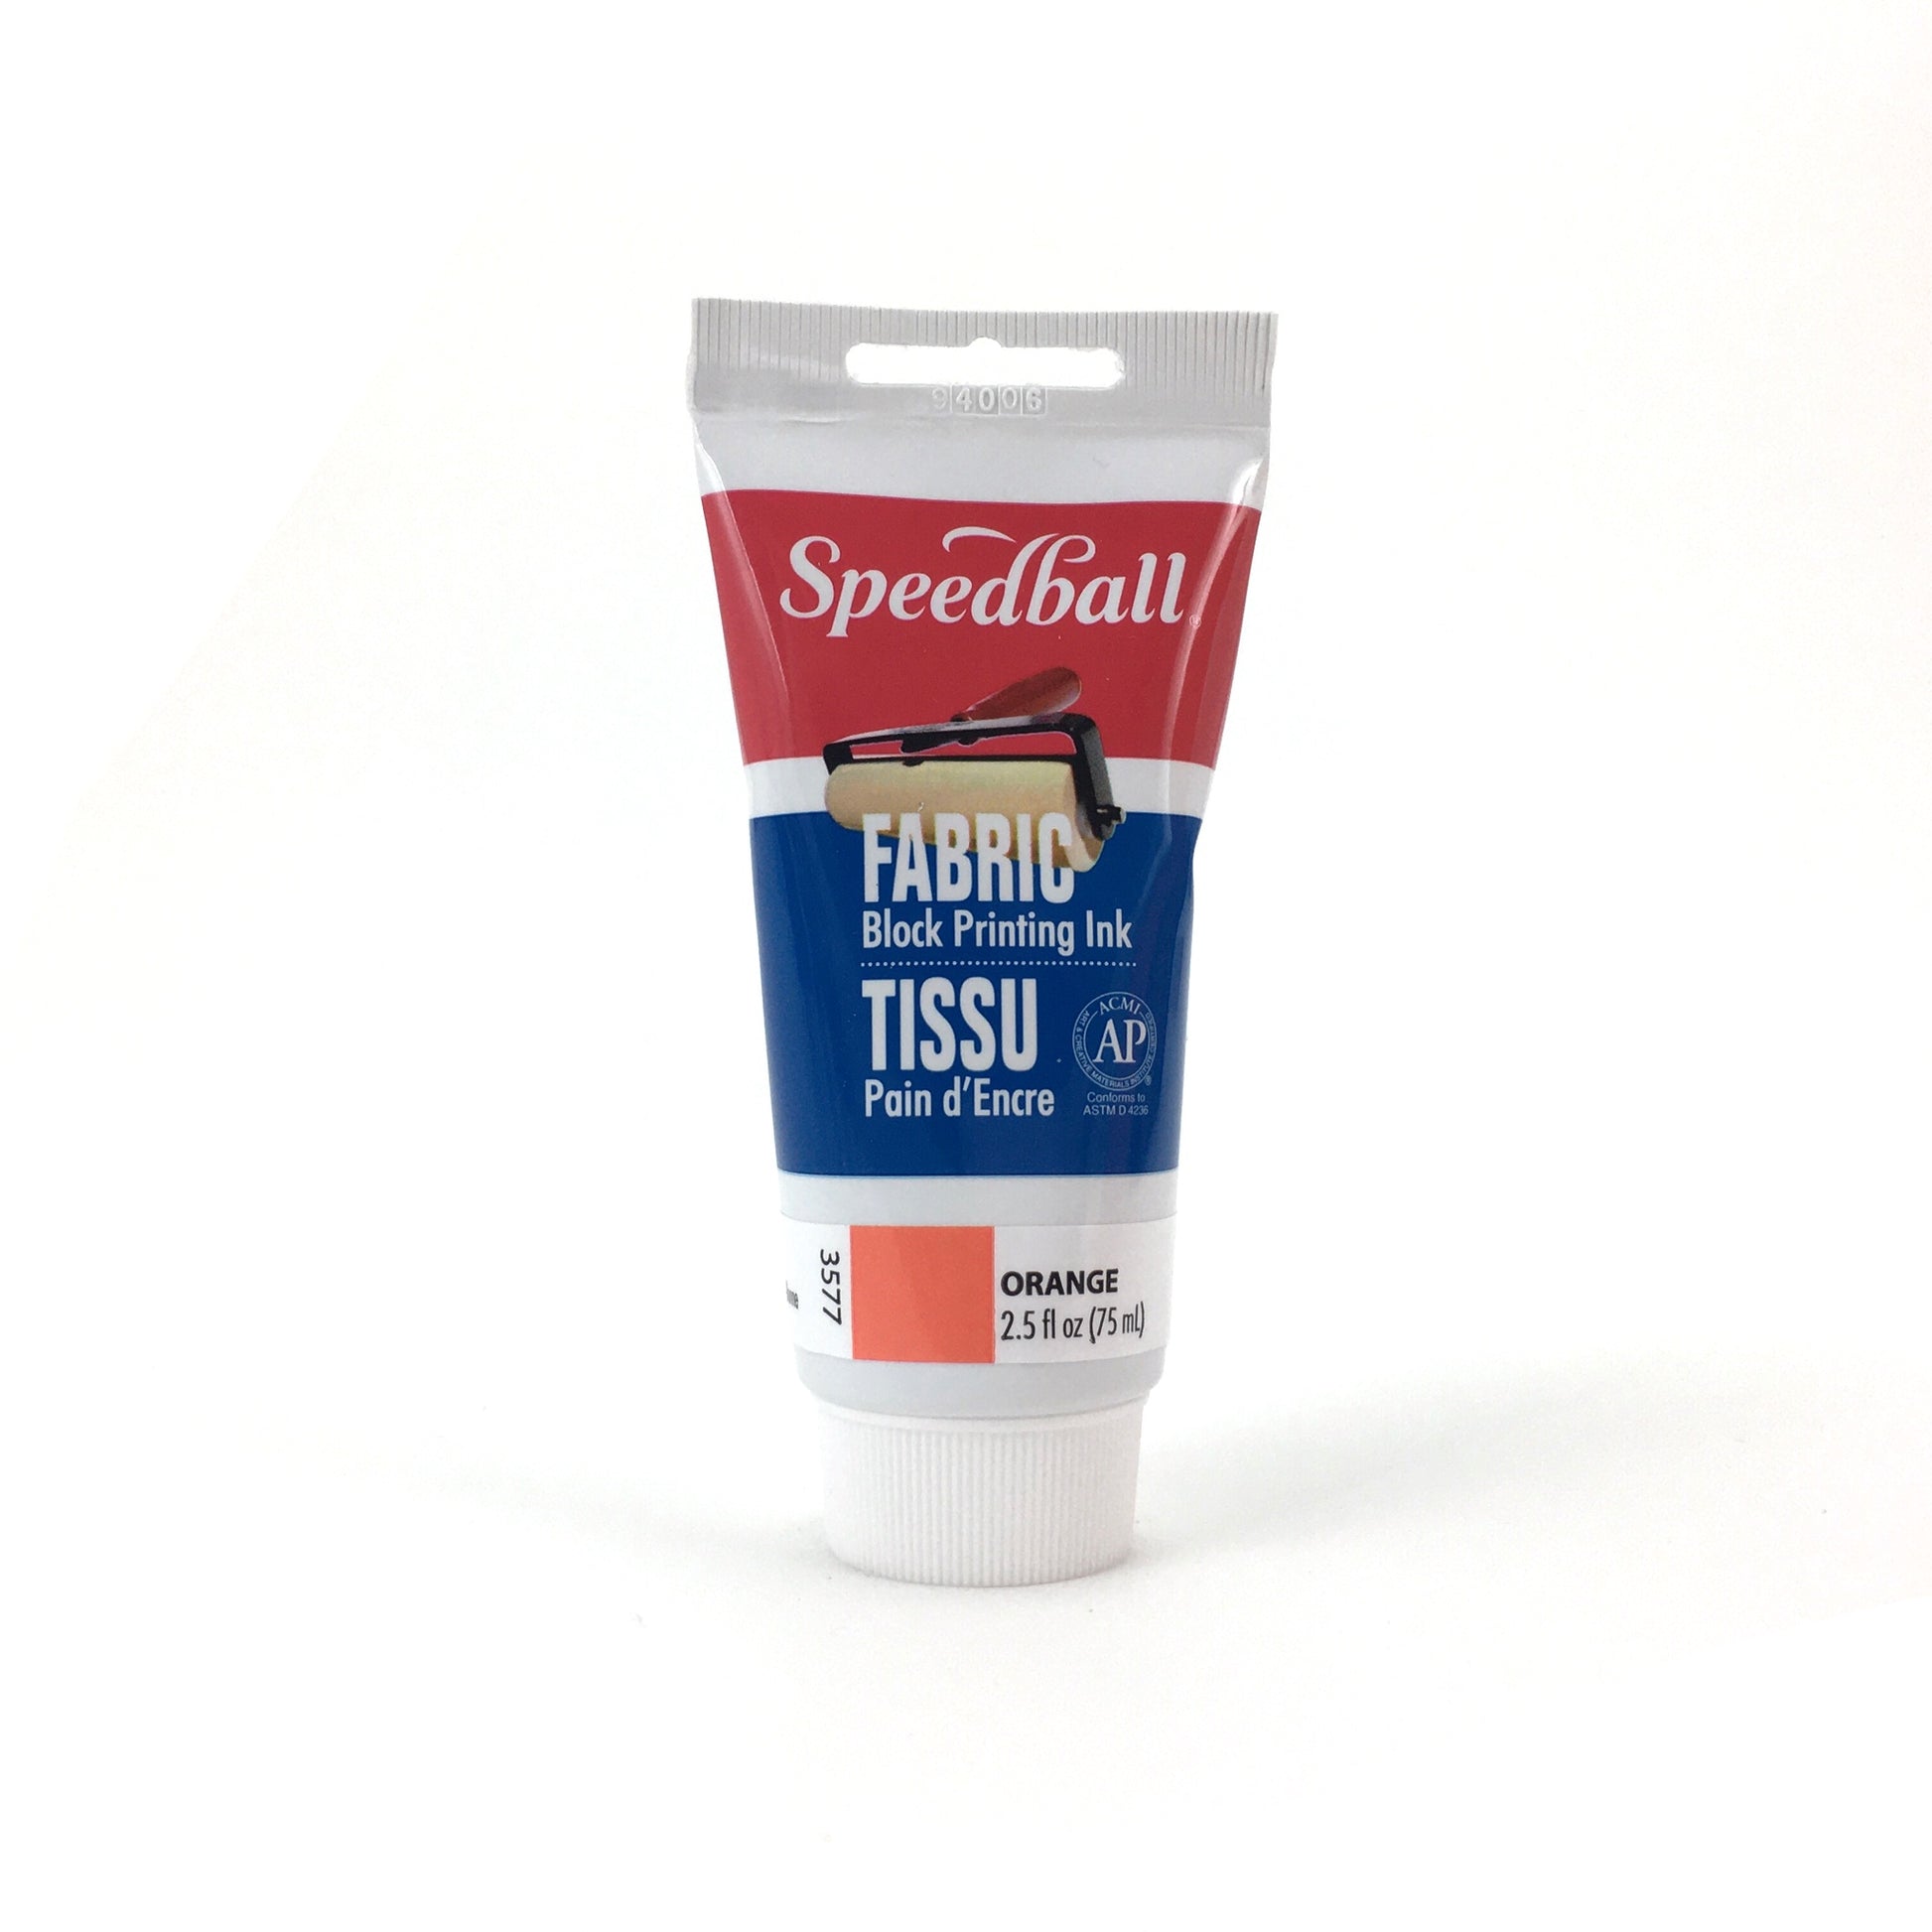 Speedball Fabric Block Printing Ink - 2.5oz. - Orange by Speedball - K. A. Artist Shop